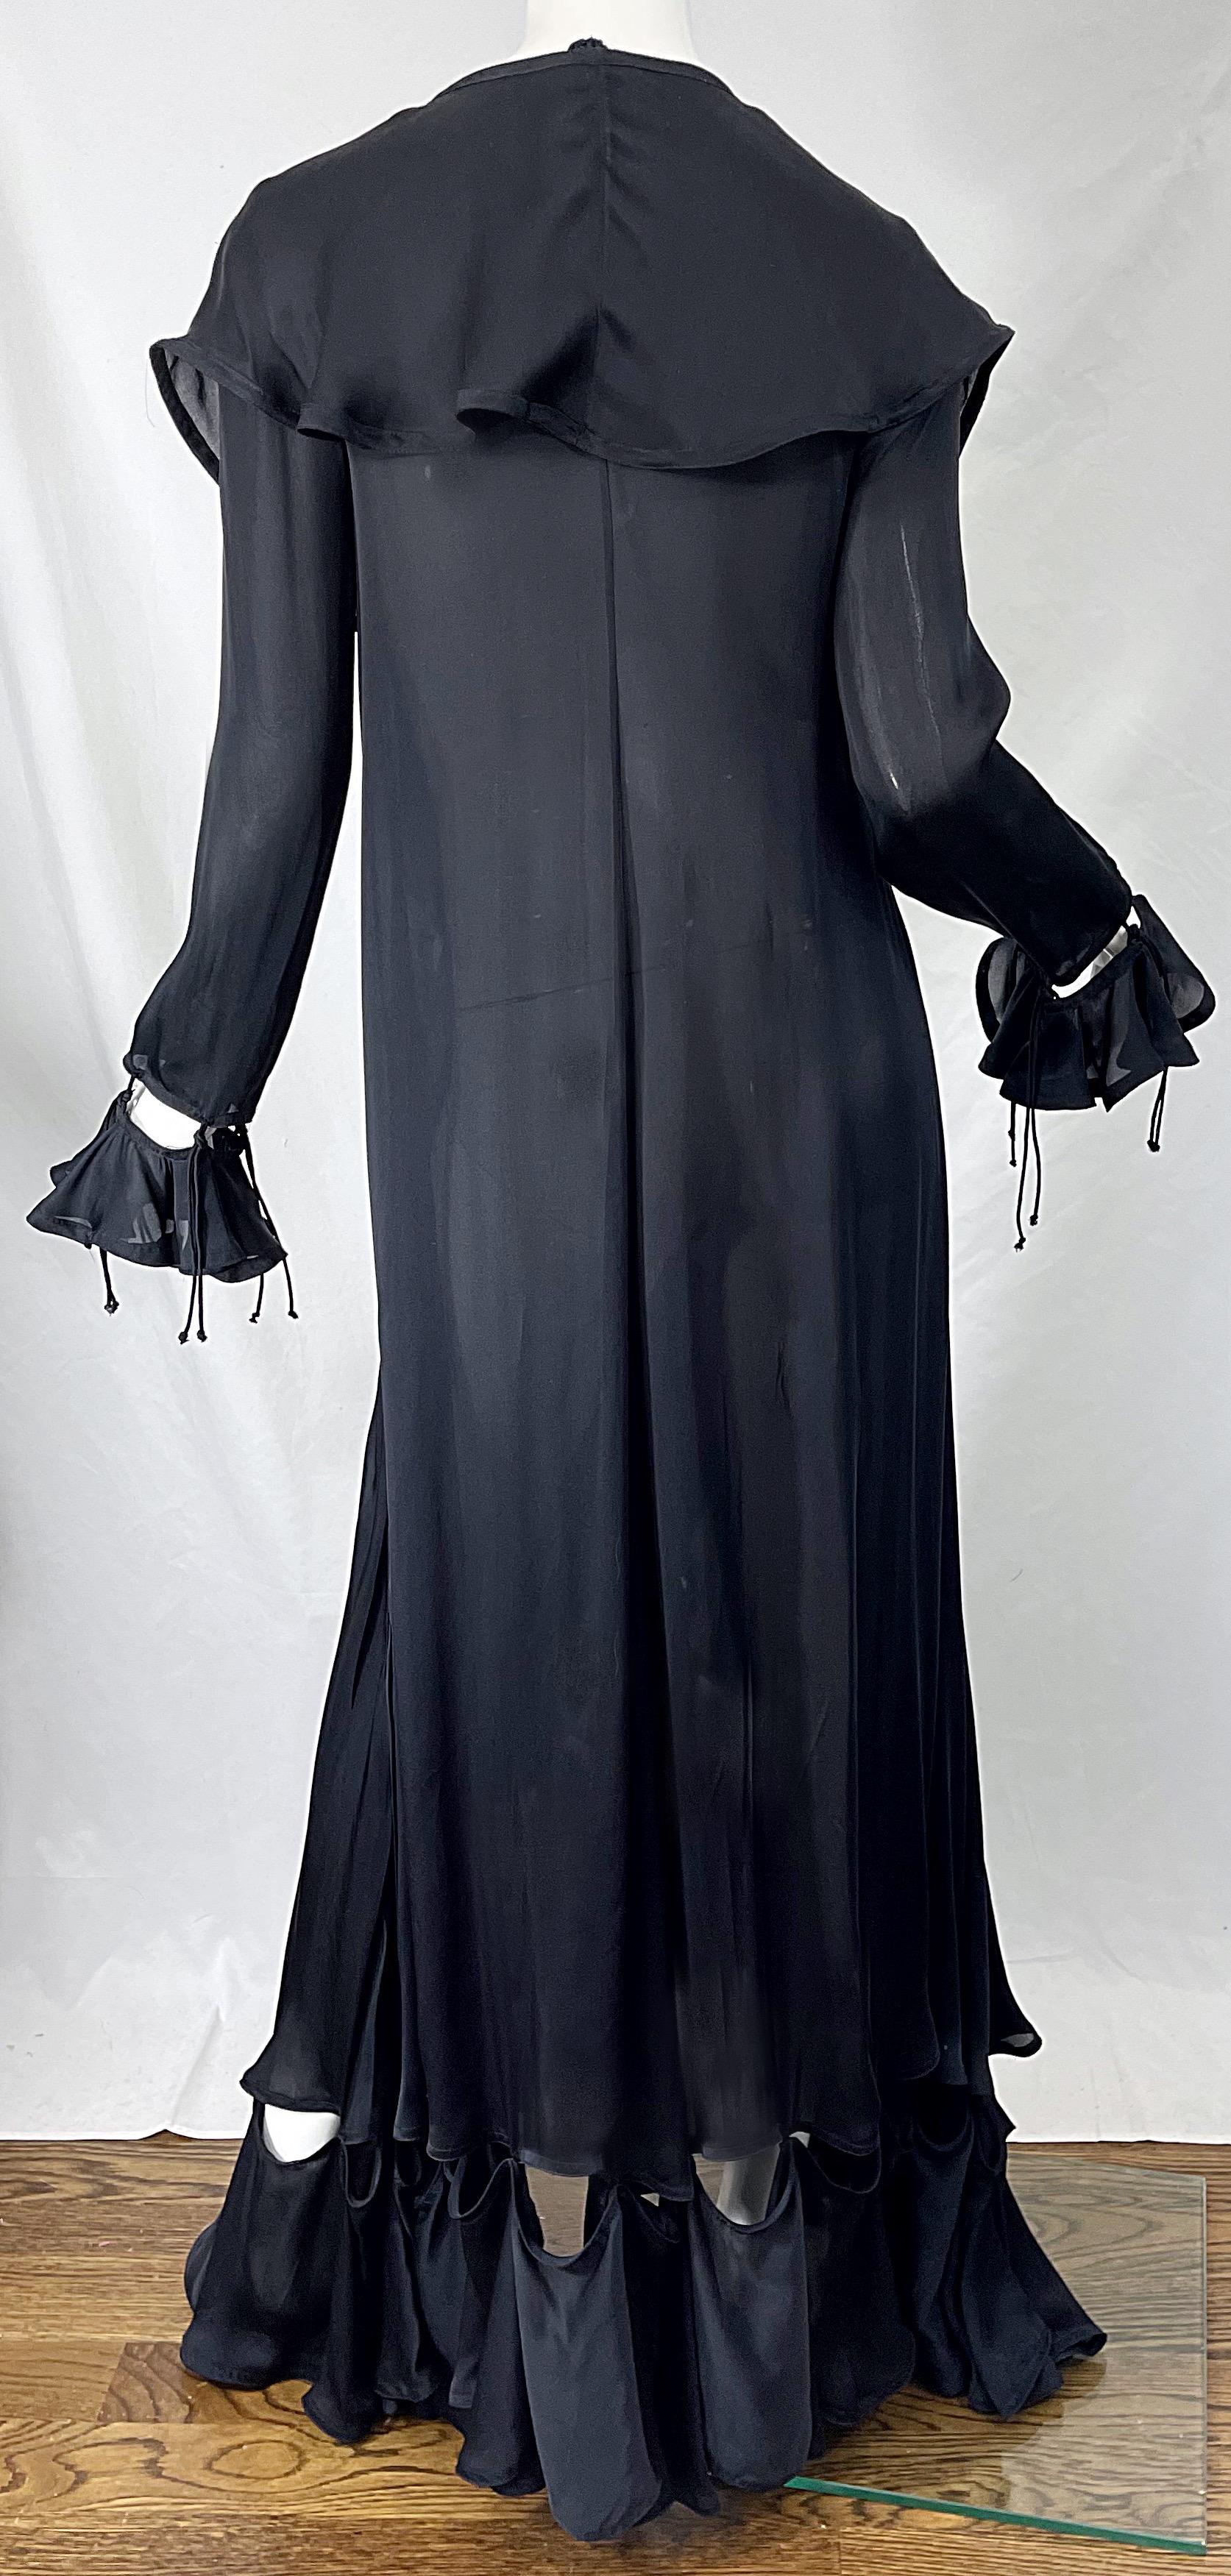 ysl black gown